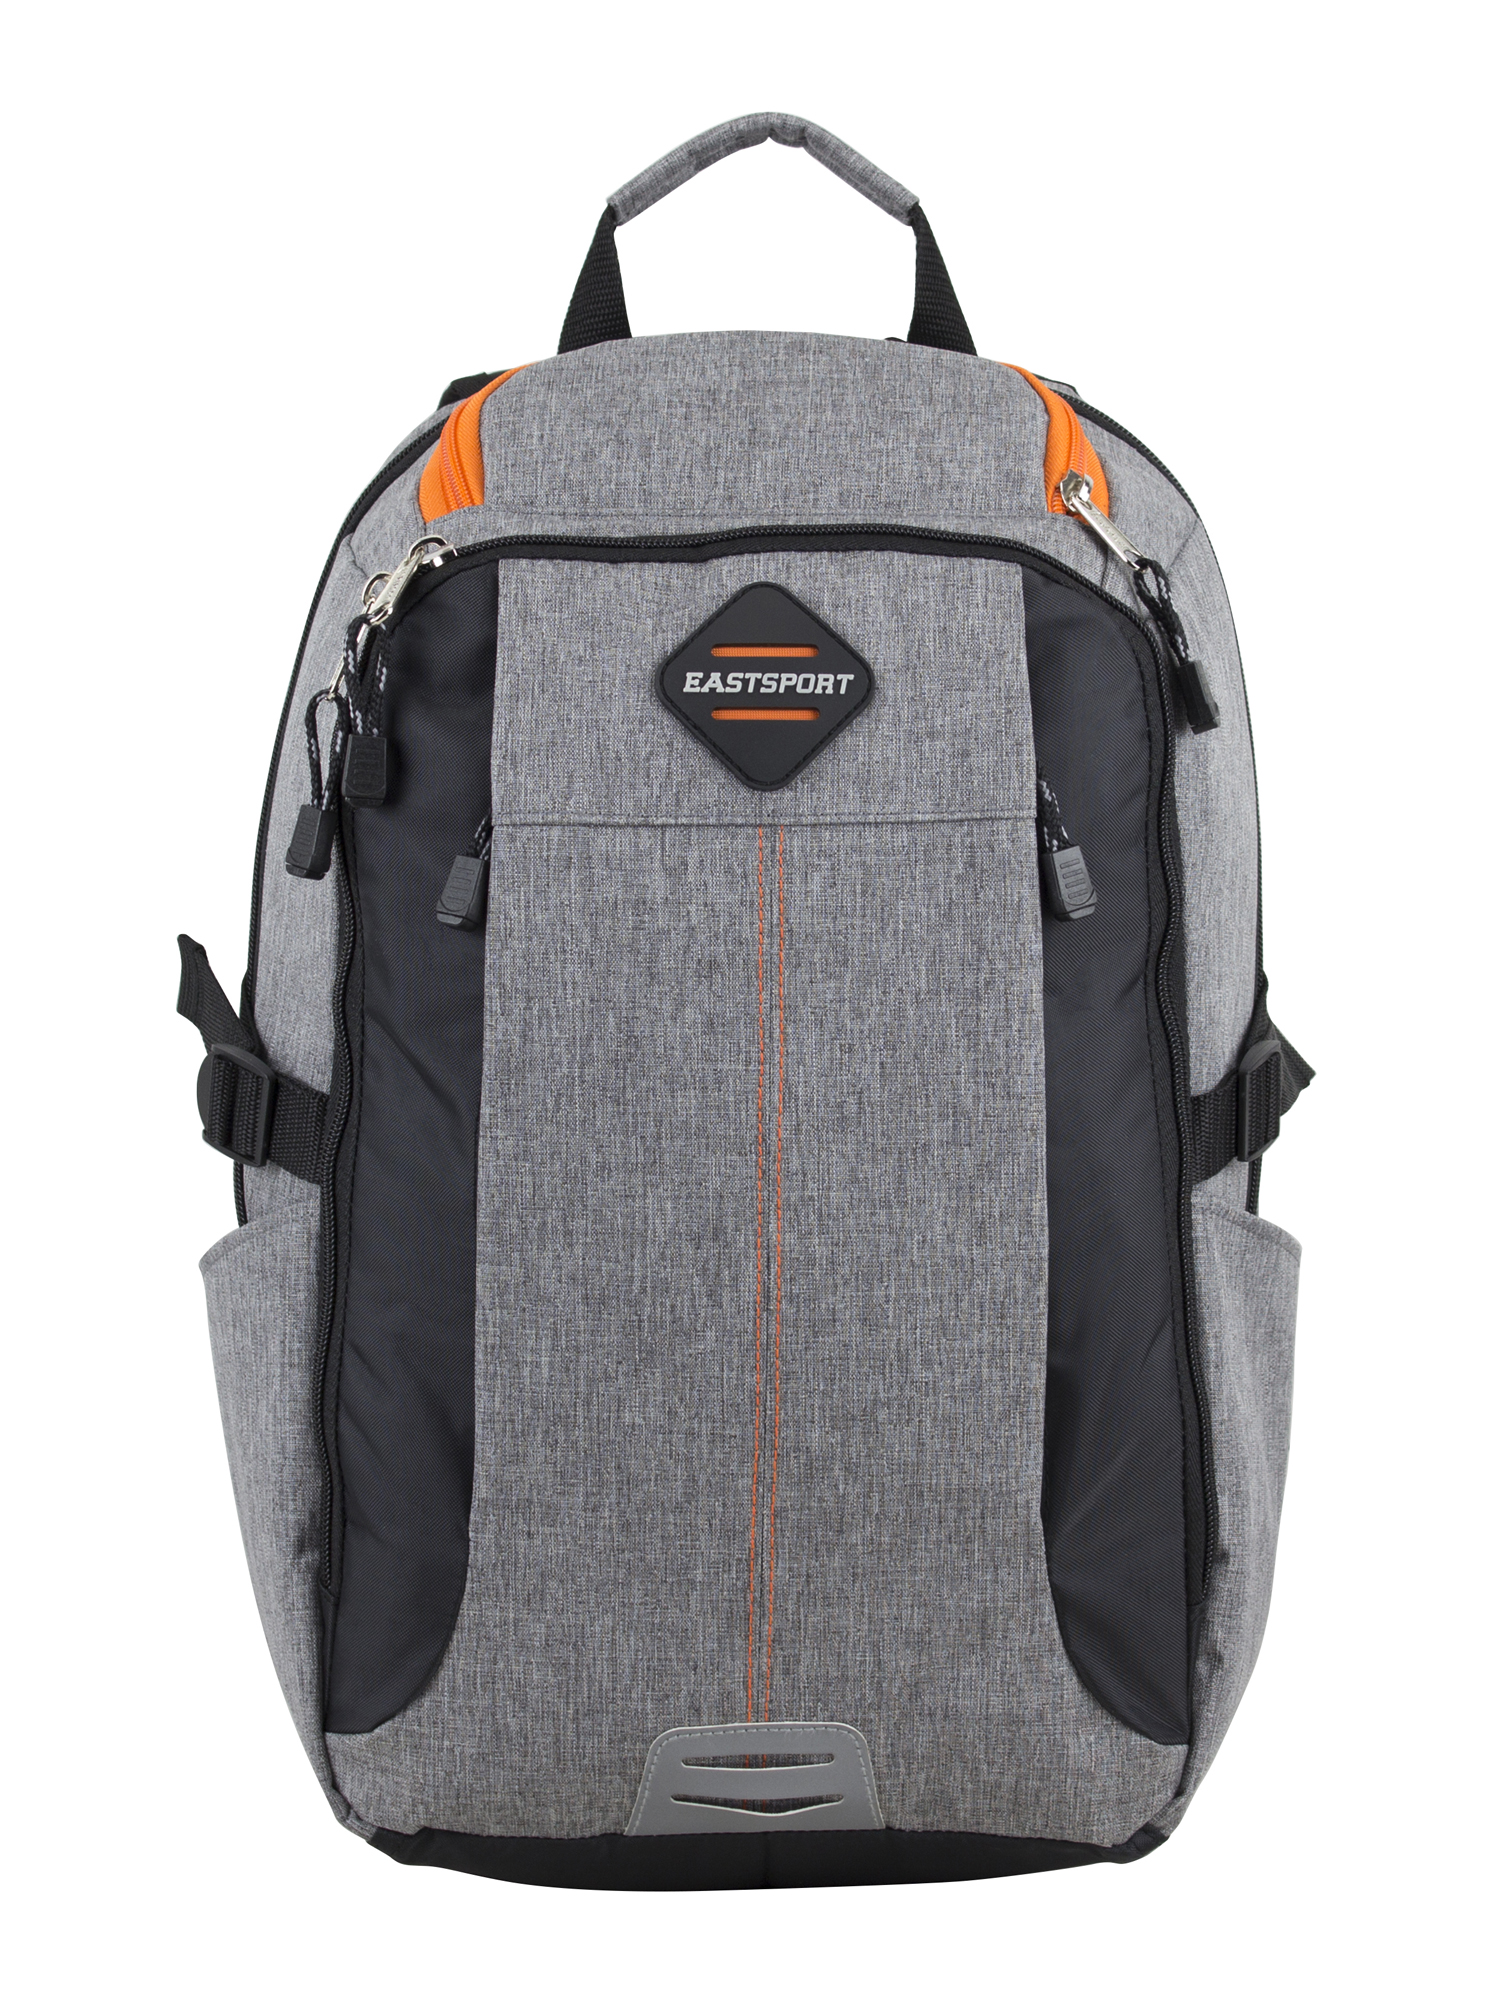 Eastsport Multi-Purpose Pro Defender Mid Grey Backpack with Adjustable Straps - image 4 of 6